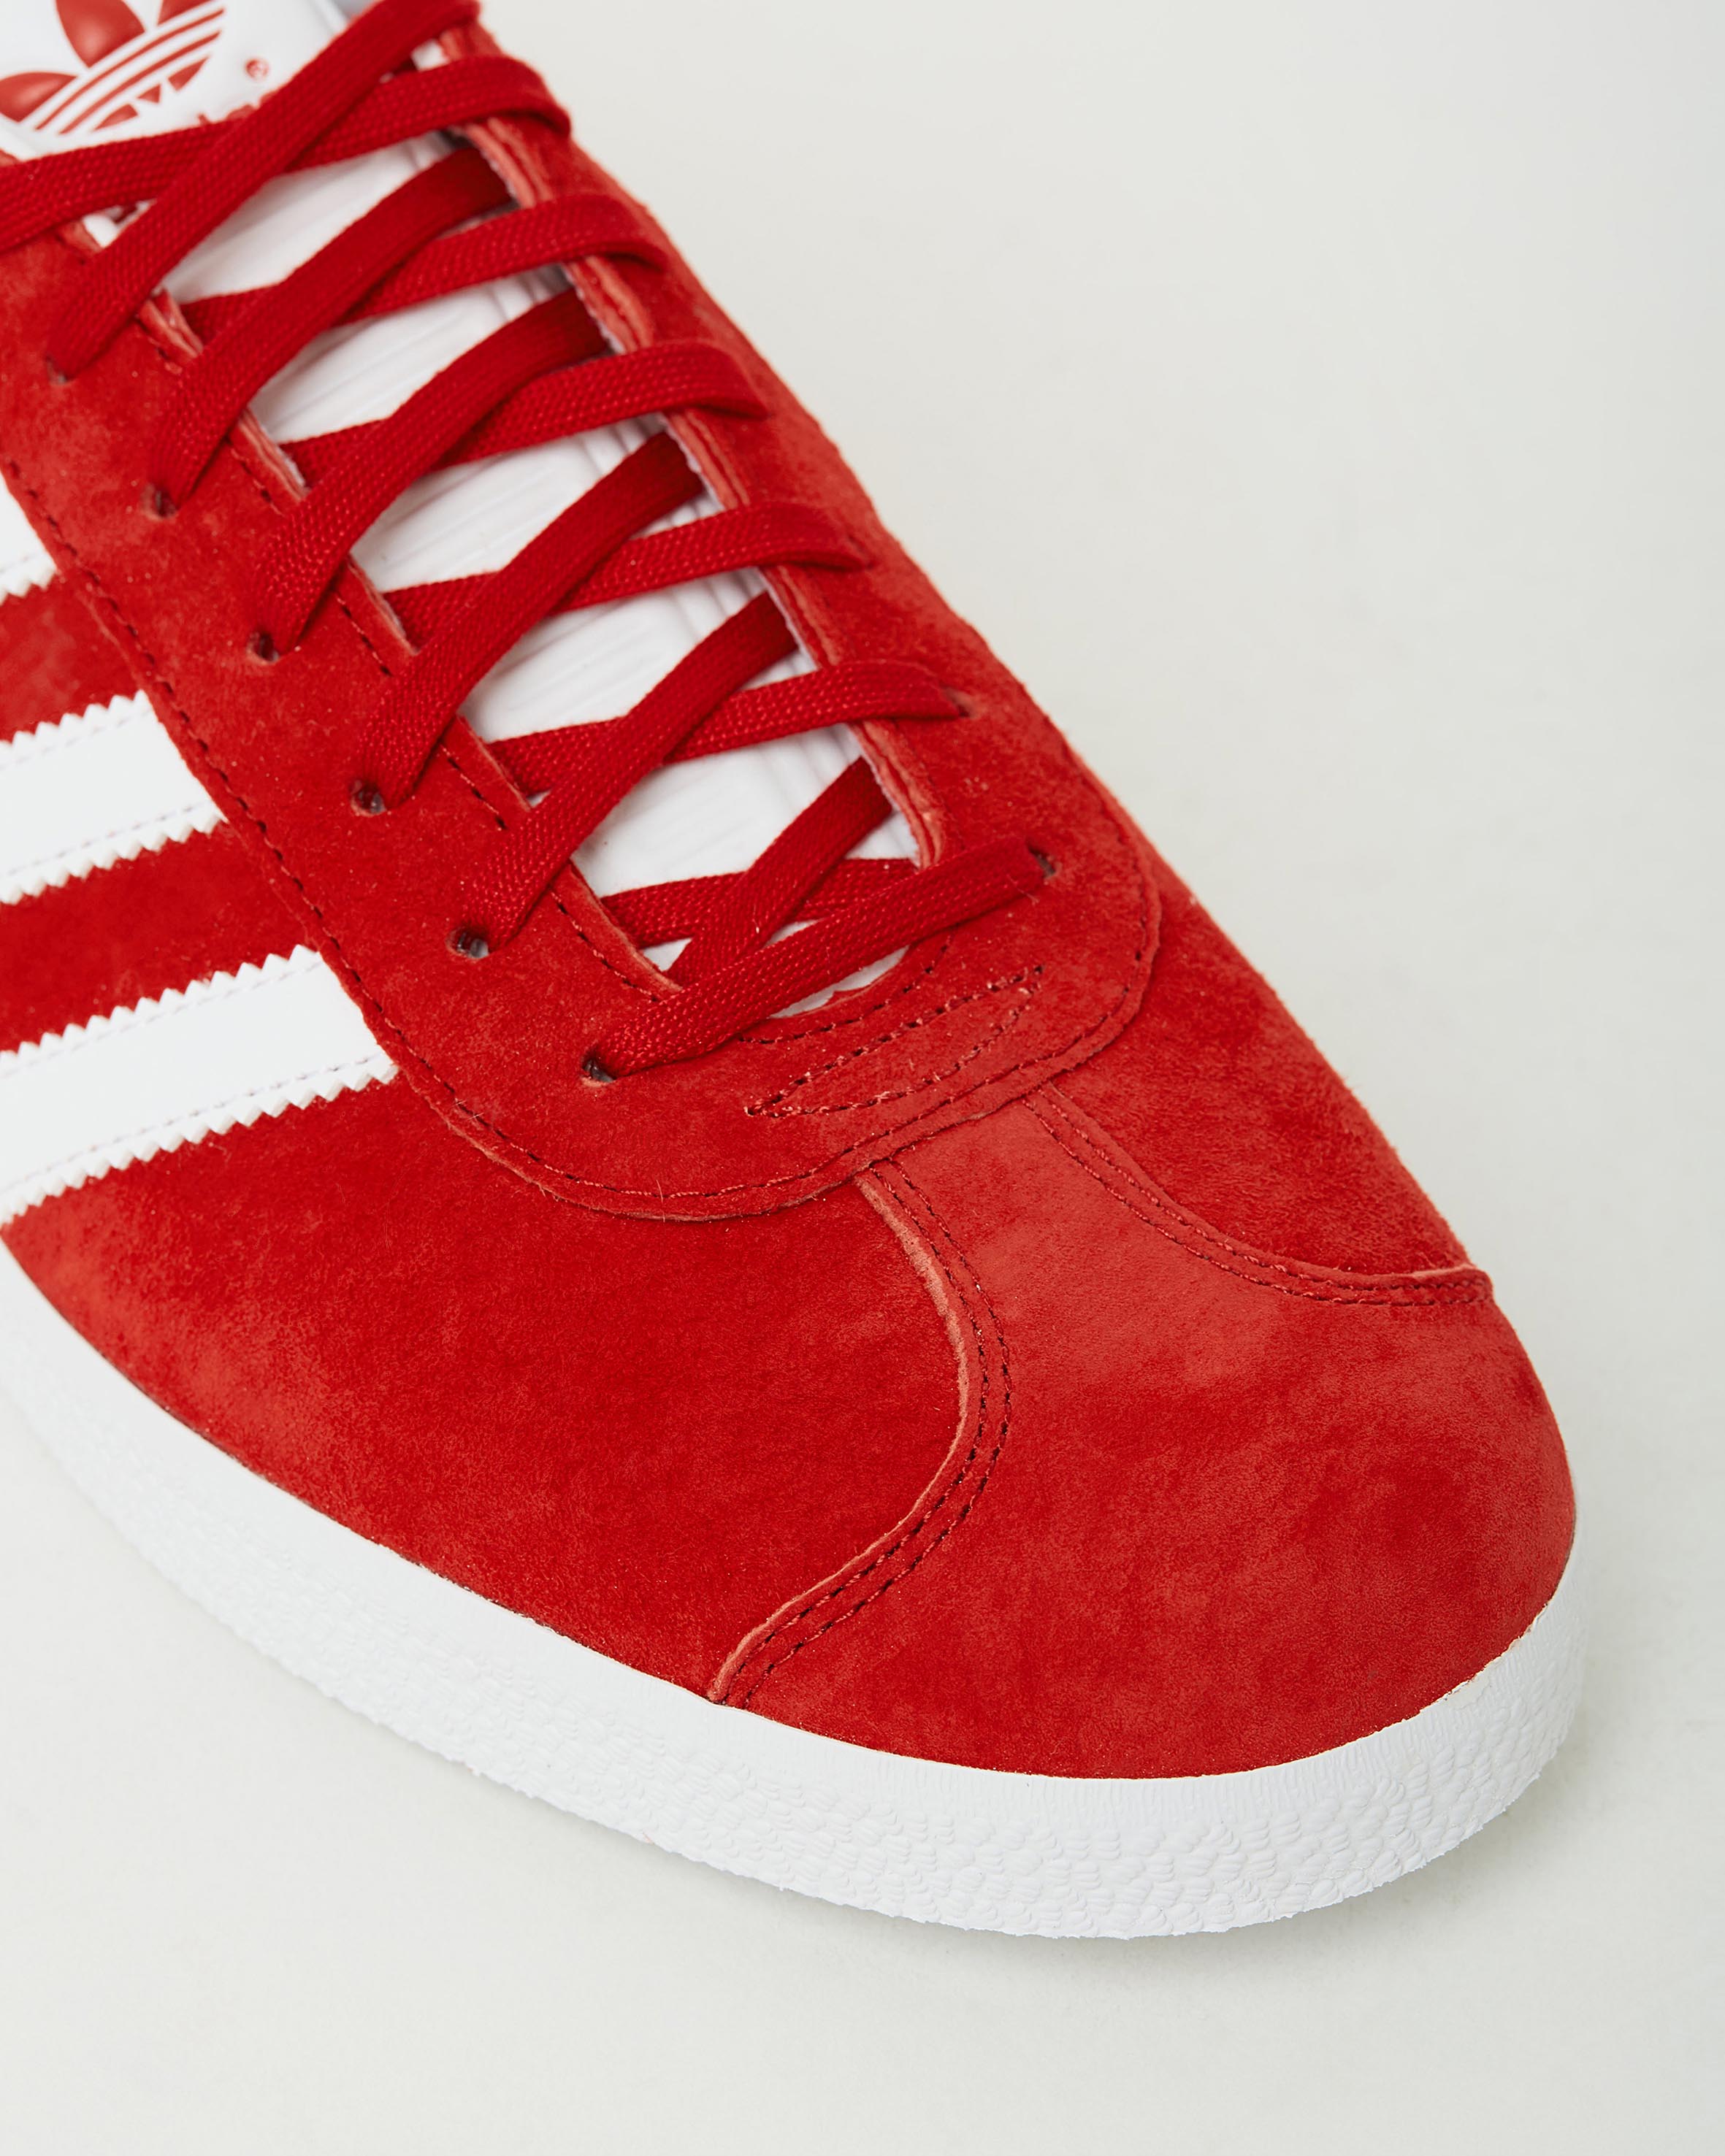 red sneakers mens adidas